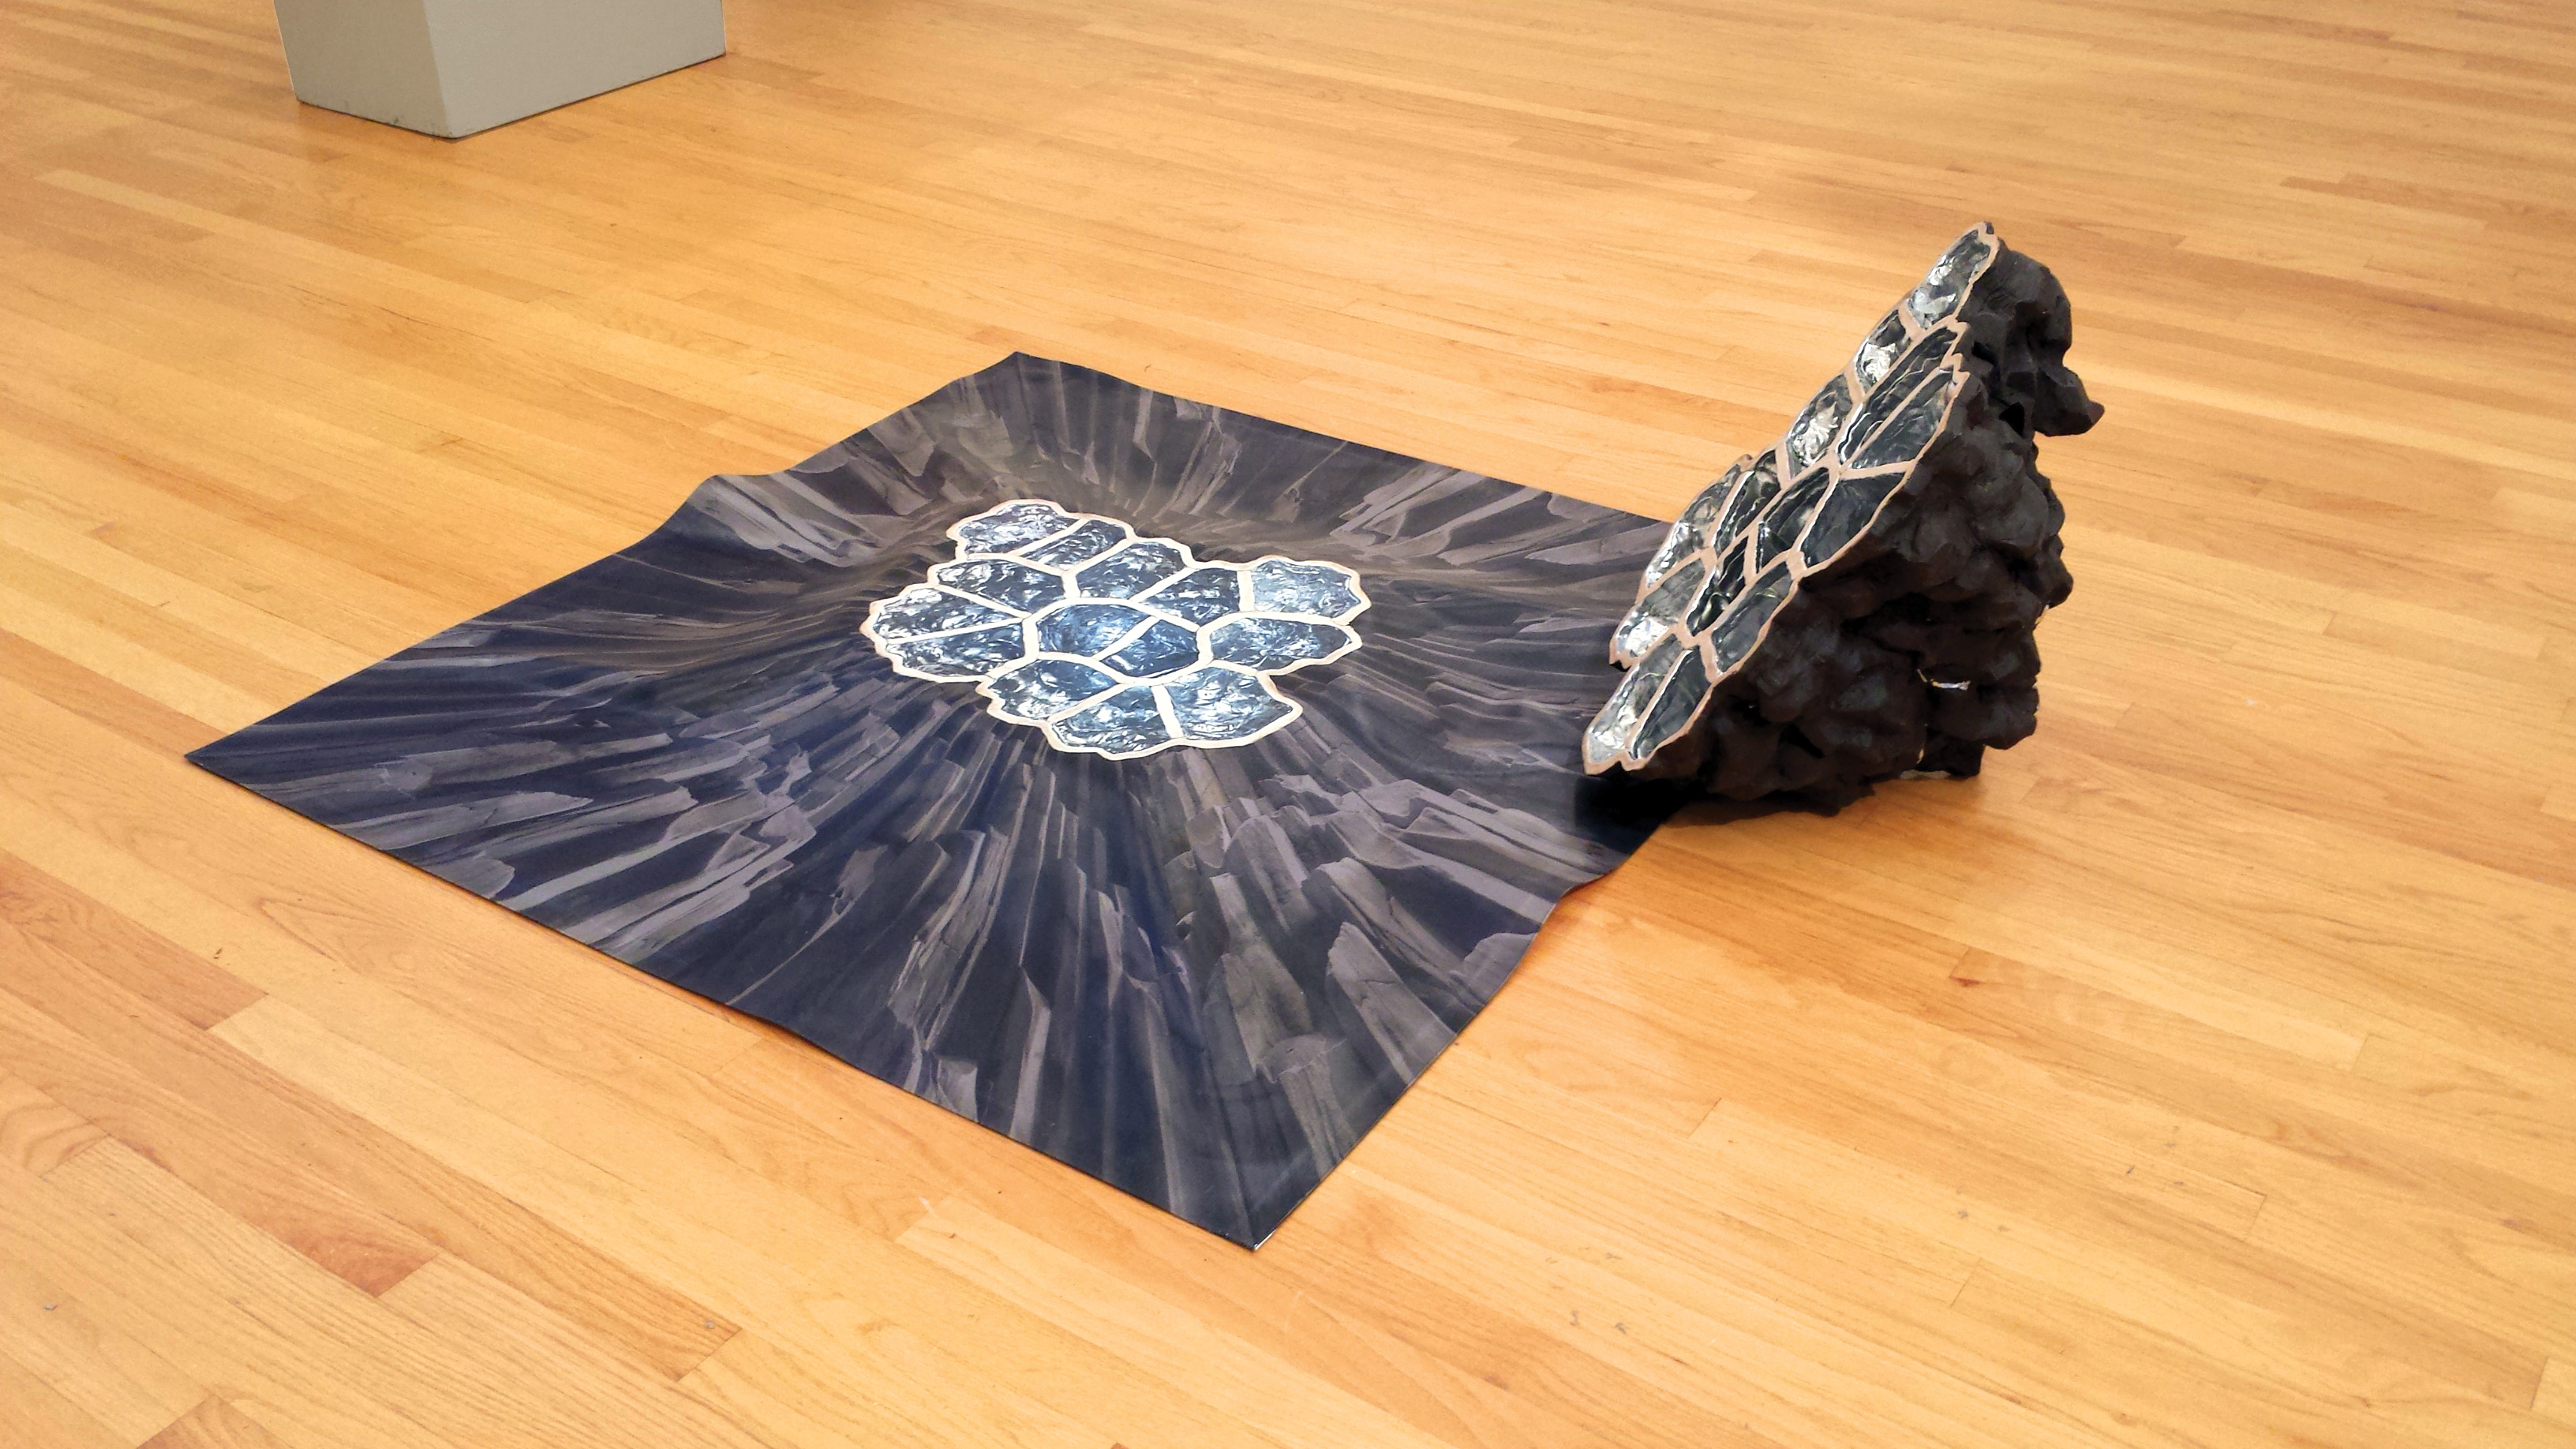 Overburden, 4 1/3 ft. (1.3 m) in width, ceramic, digital print on vinyl, 2015.